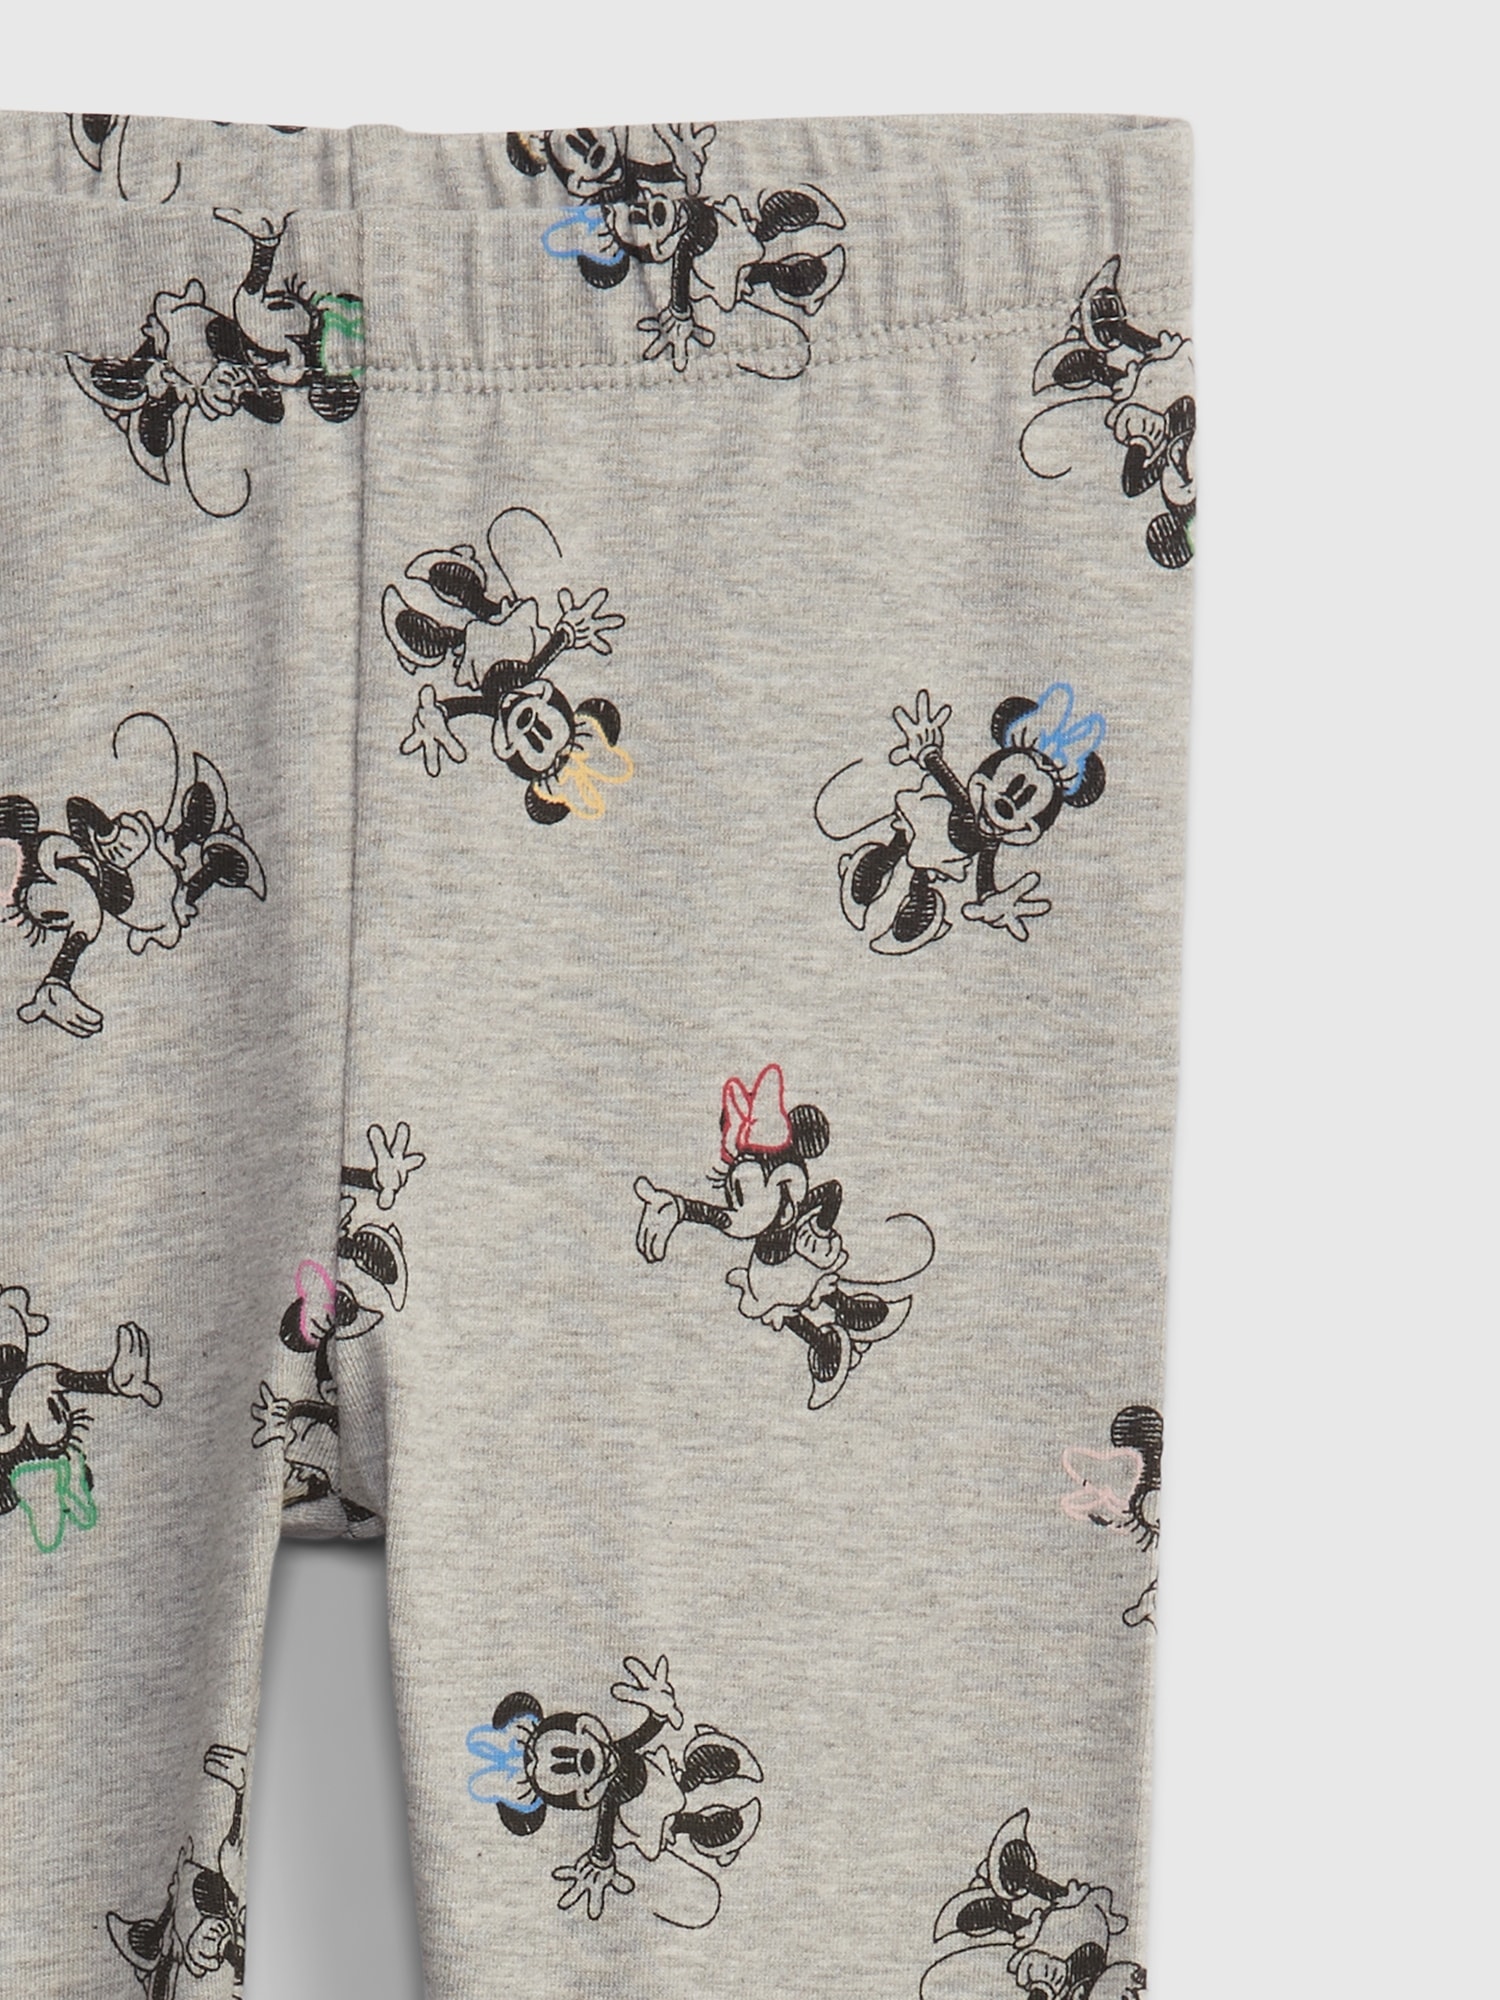 Mickey Mouse Print Slim Fit Leggings